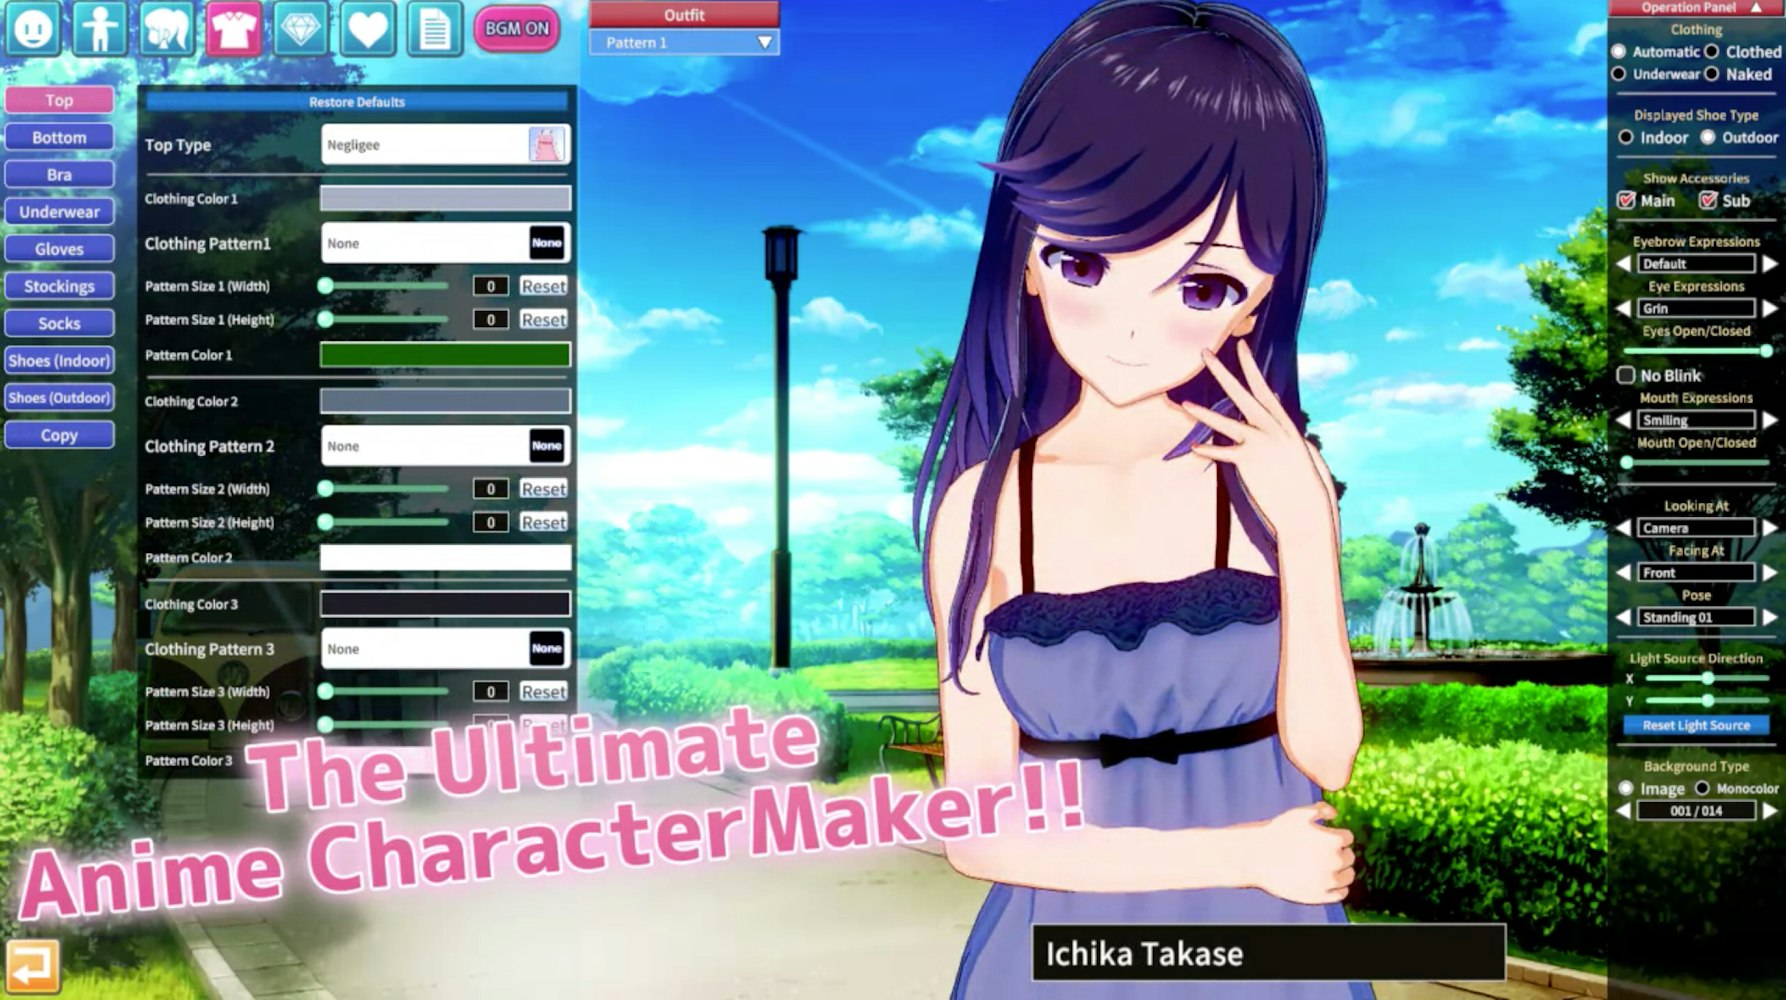 Koikatsu Party character creator screenshot